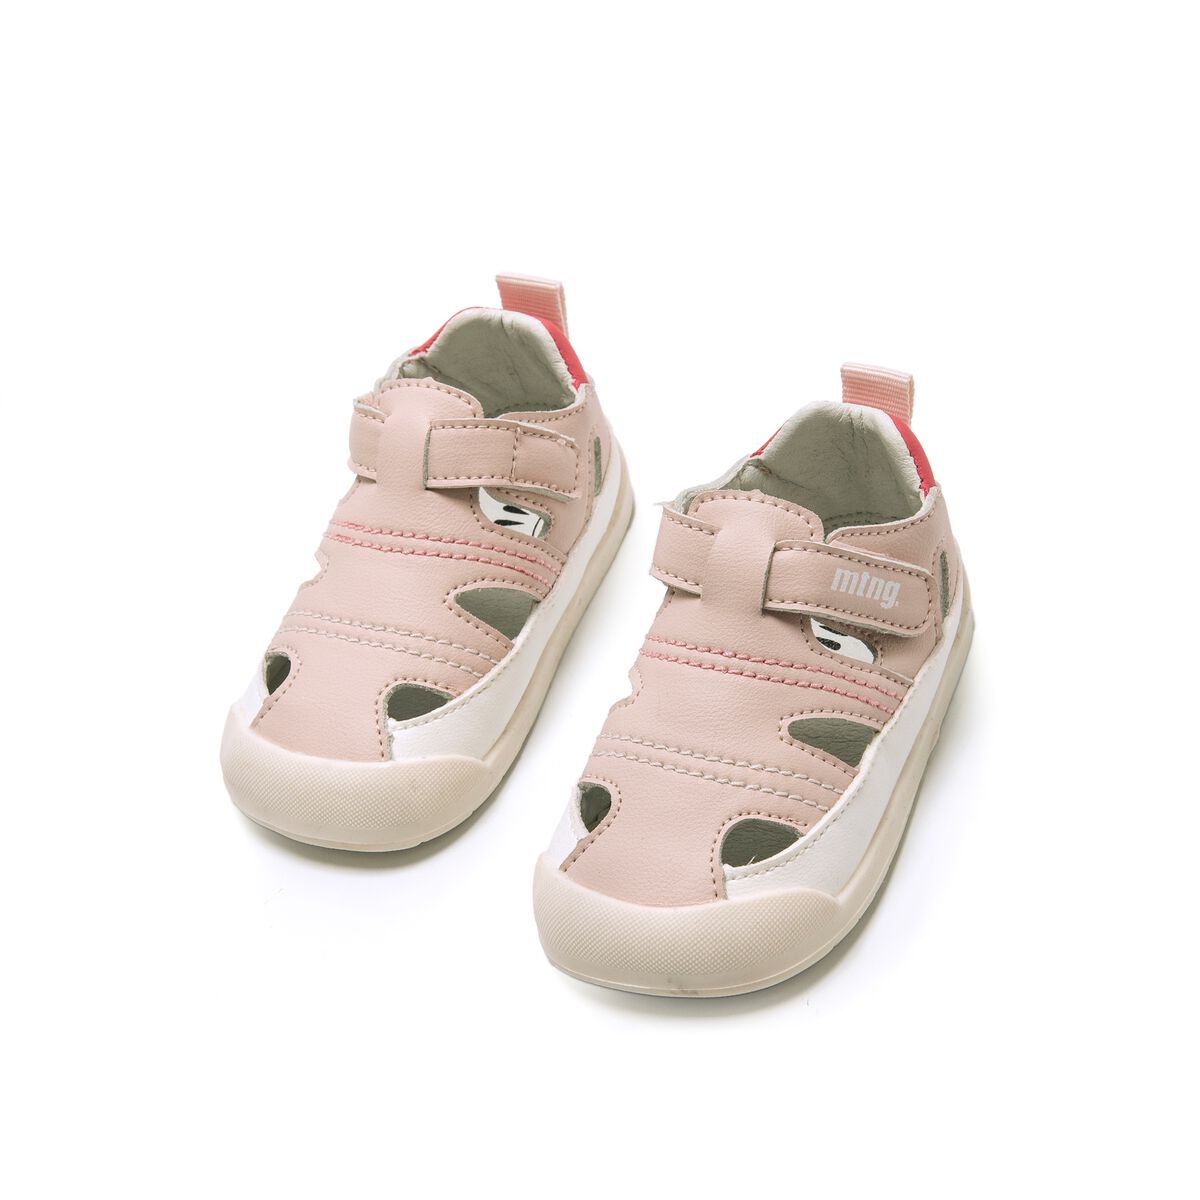 Sneakers de Rapariga modelo FREE BABY de MTNG image number 4